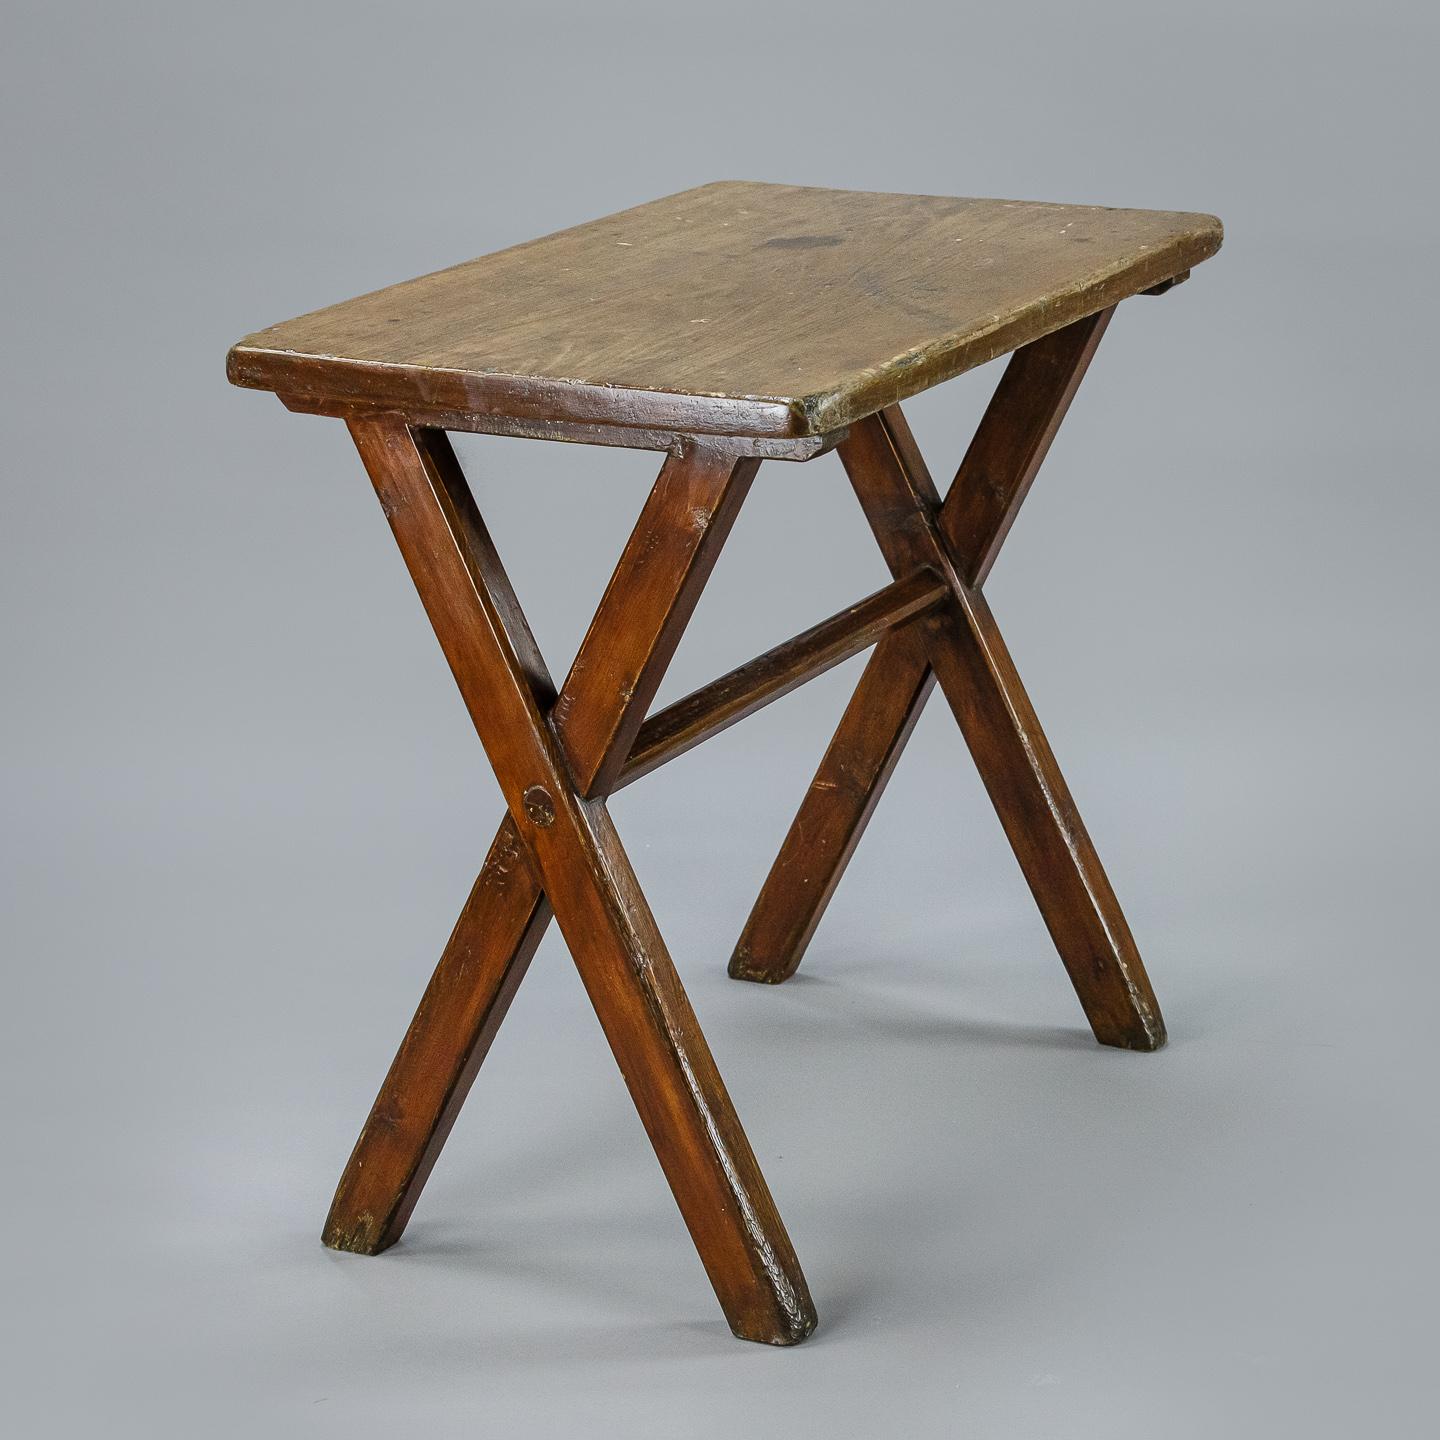 19th Century Small Single Plank X Frame Tavern Table